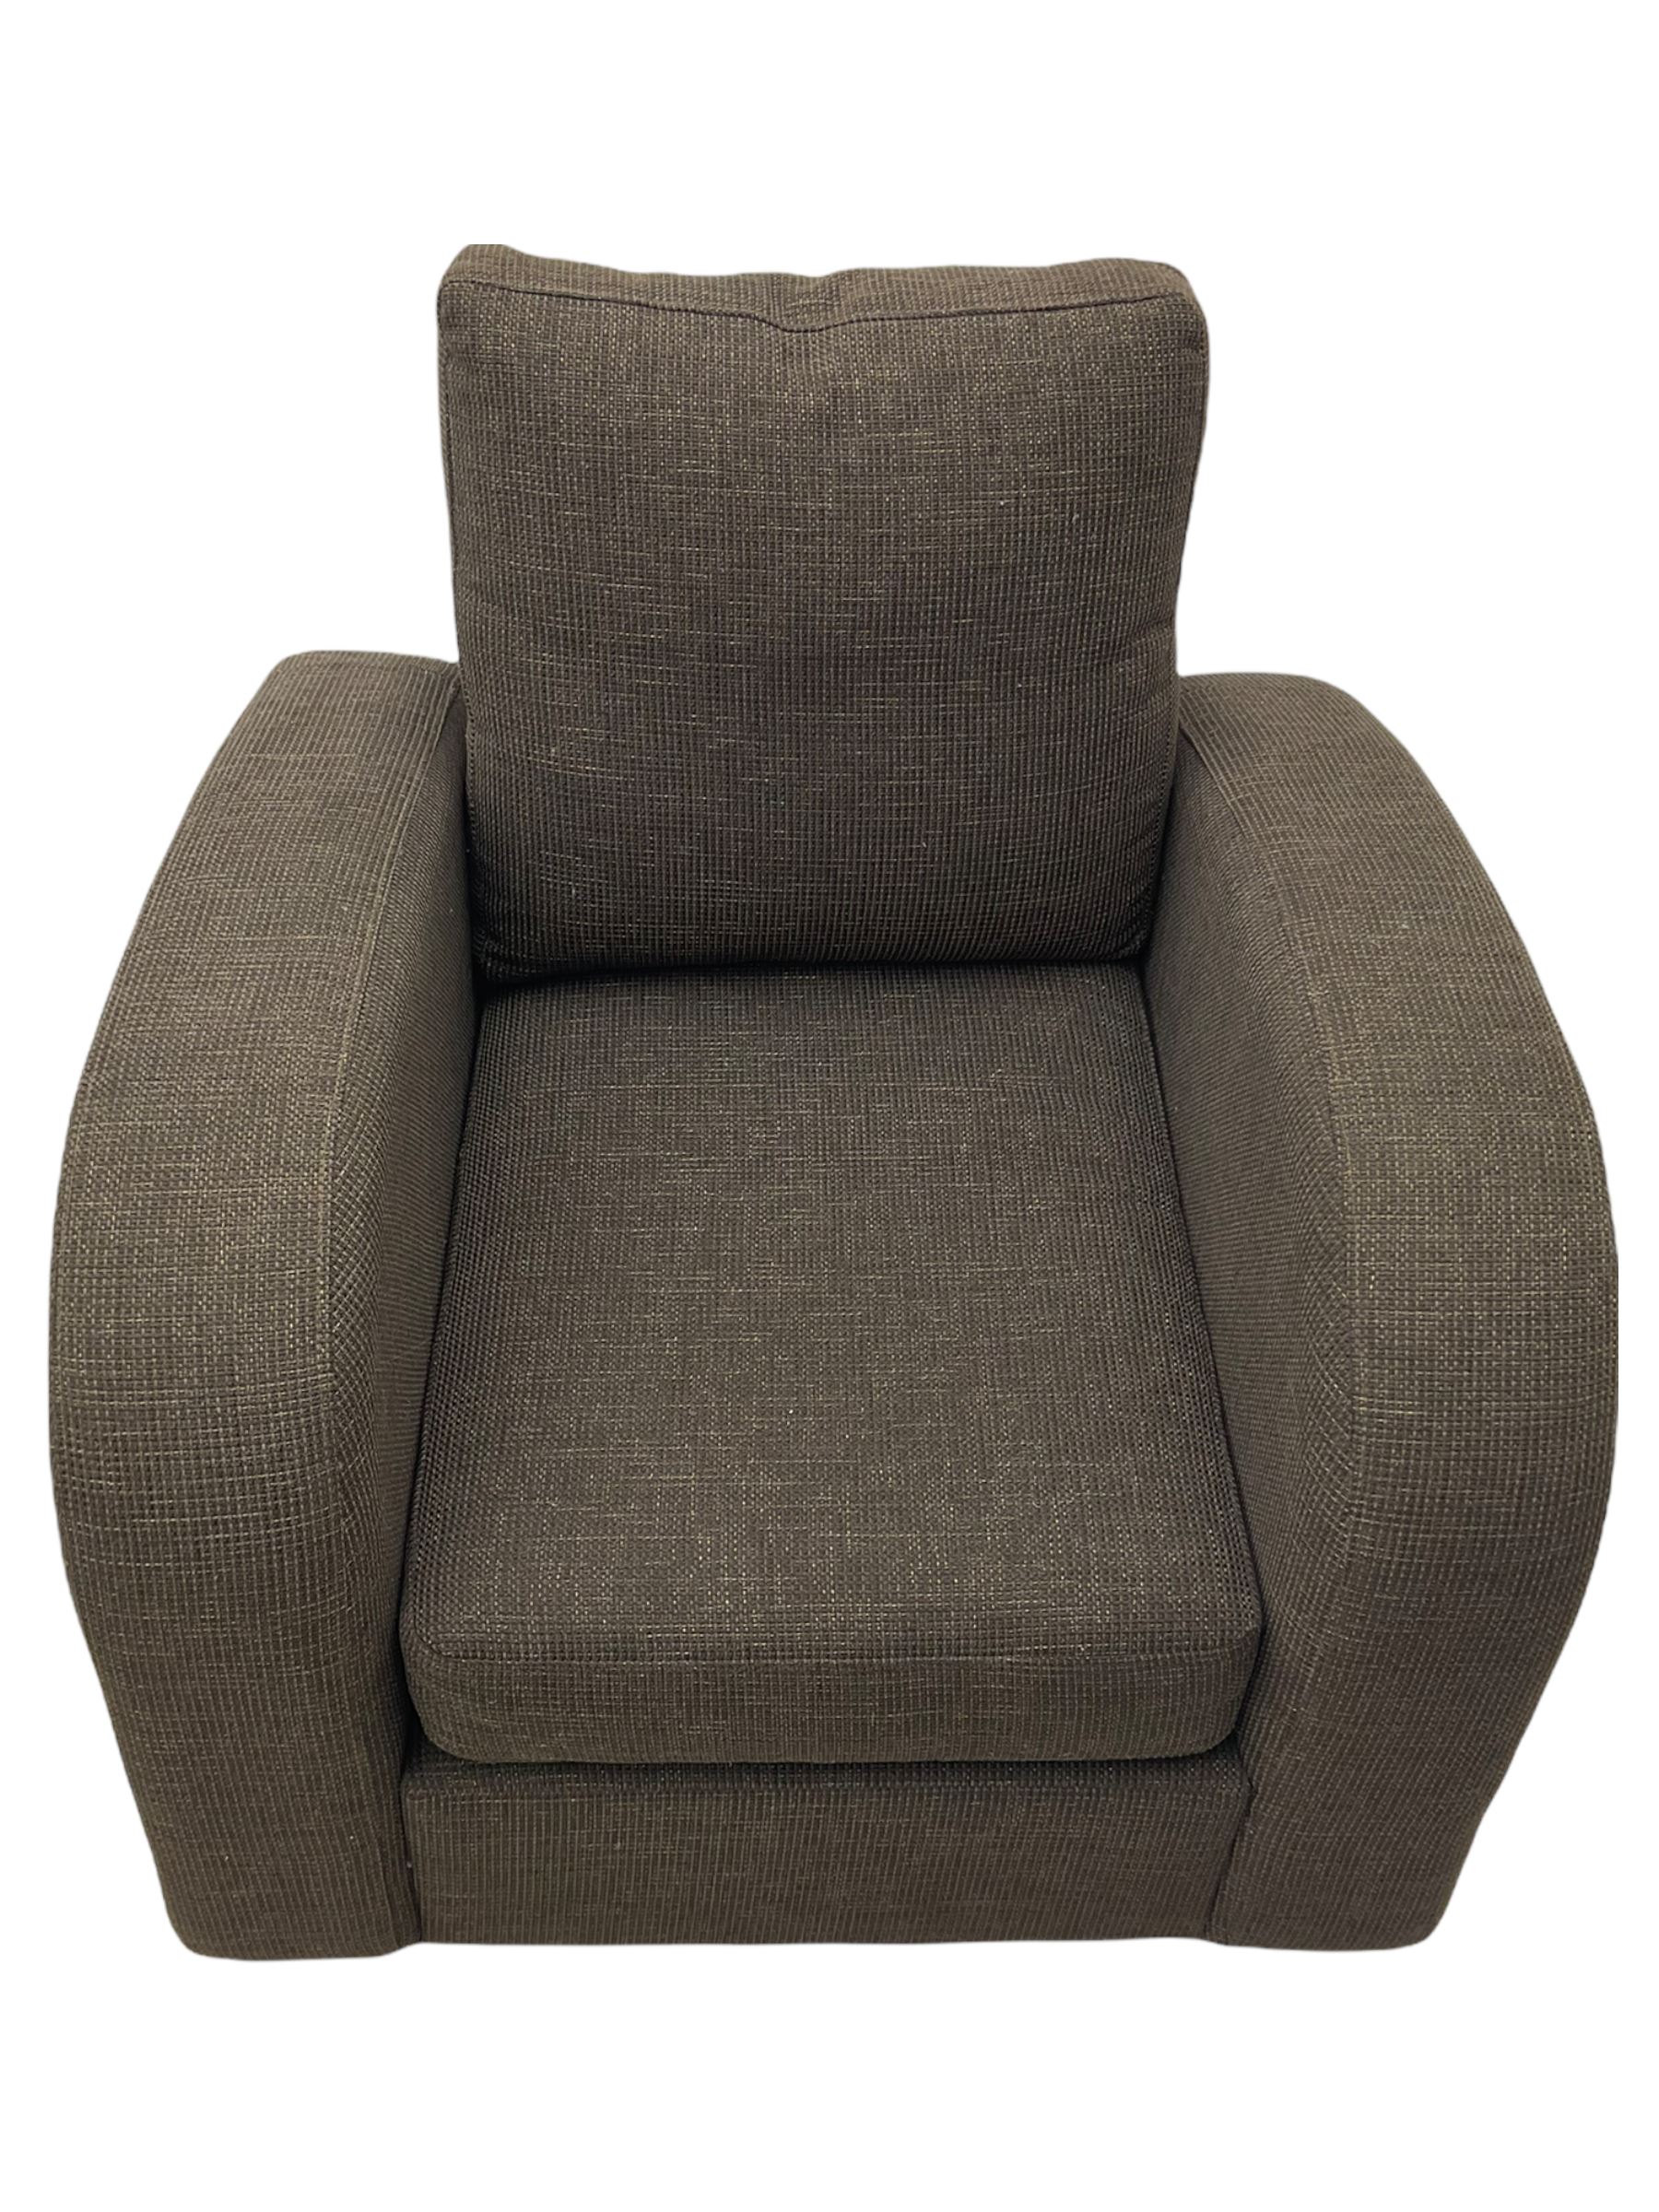 Swivel armchair - Image 2 of 9